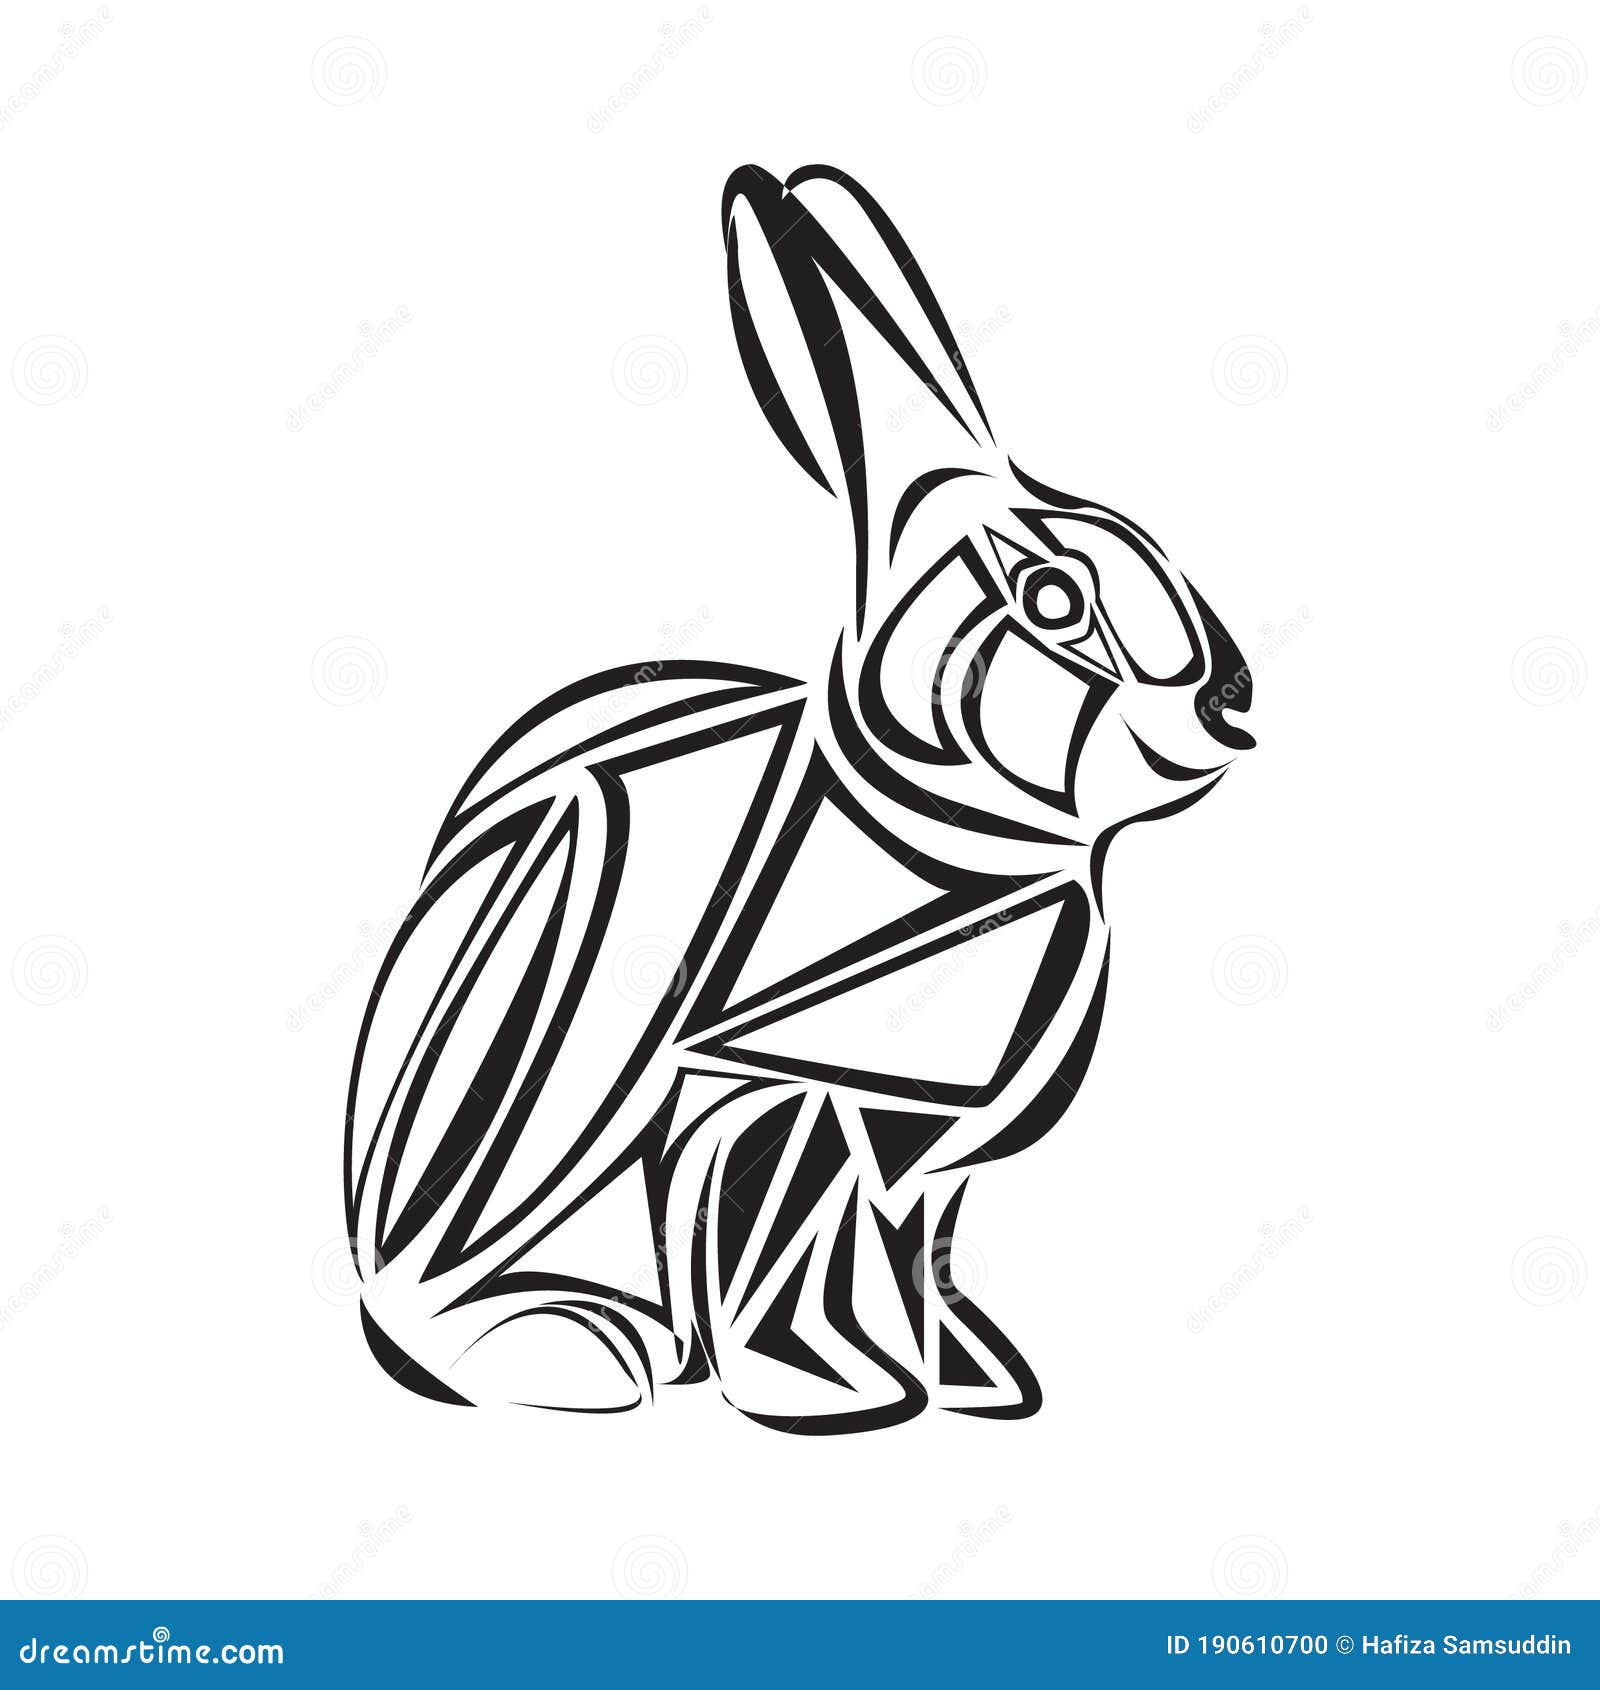 23 Best Bunny Rabbit Tattoo Ideas + Designs - TattooGlee | Rabbit tattoos, Bunny  tattoo small, Tattoos